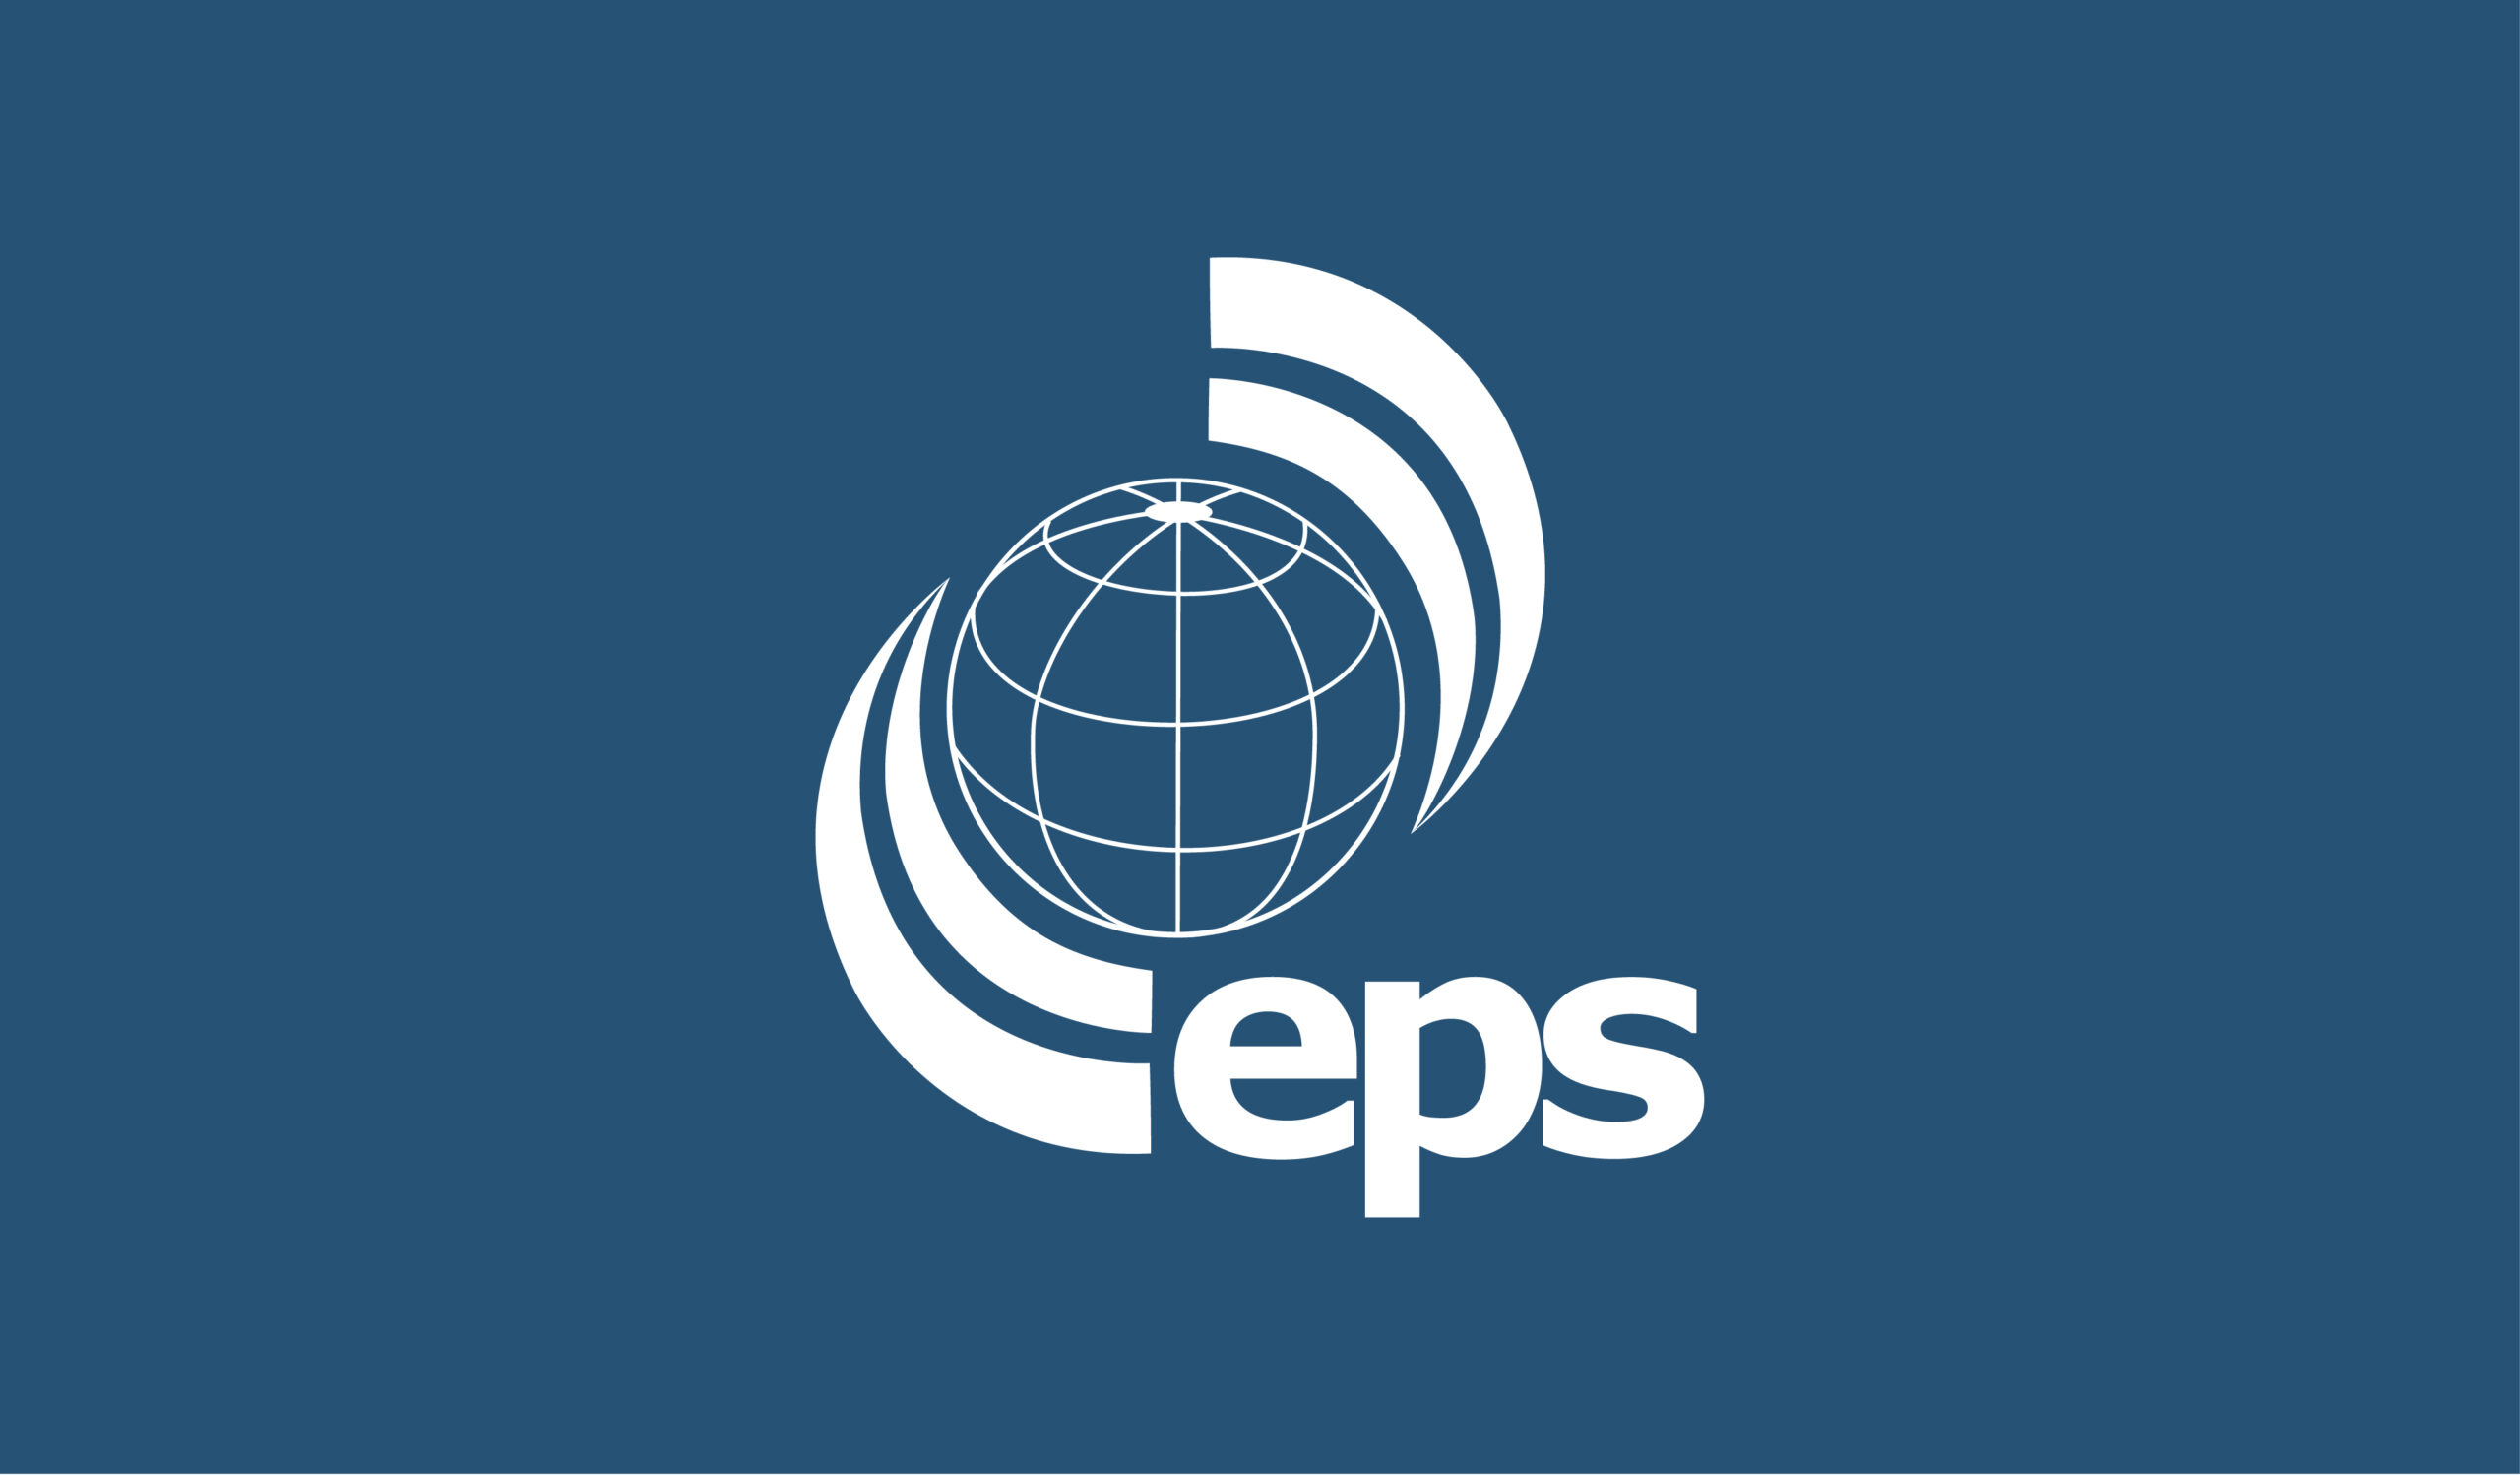 EPSGlobal logo.